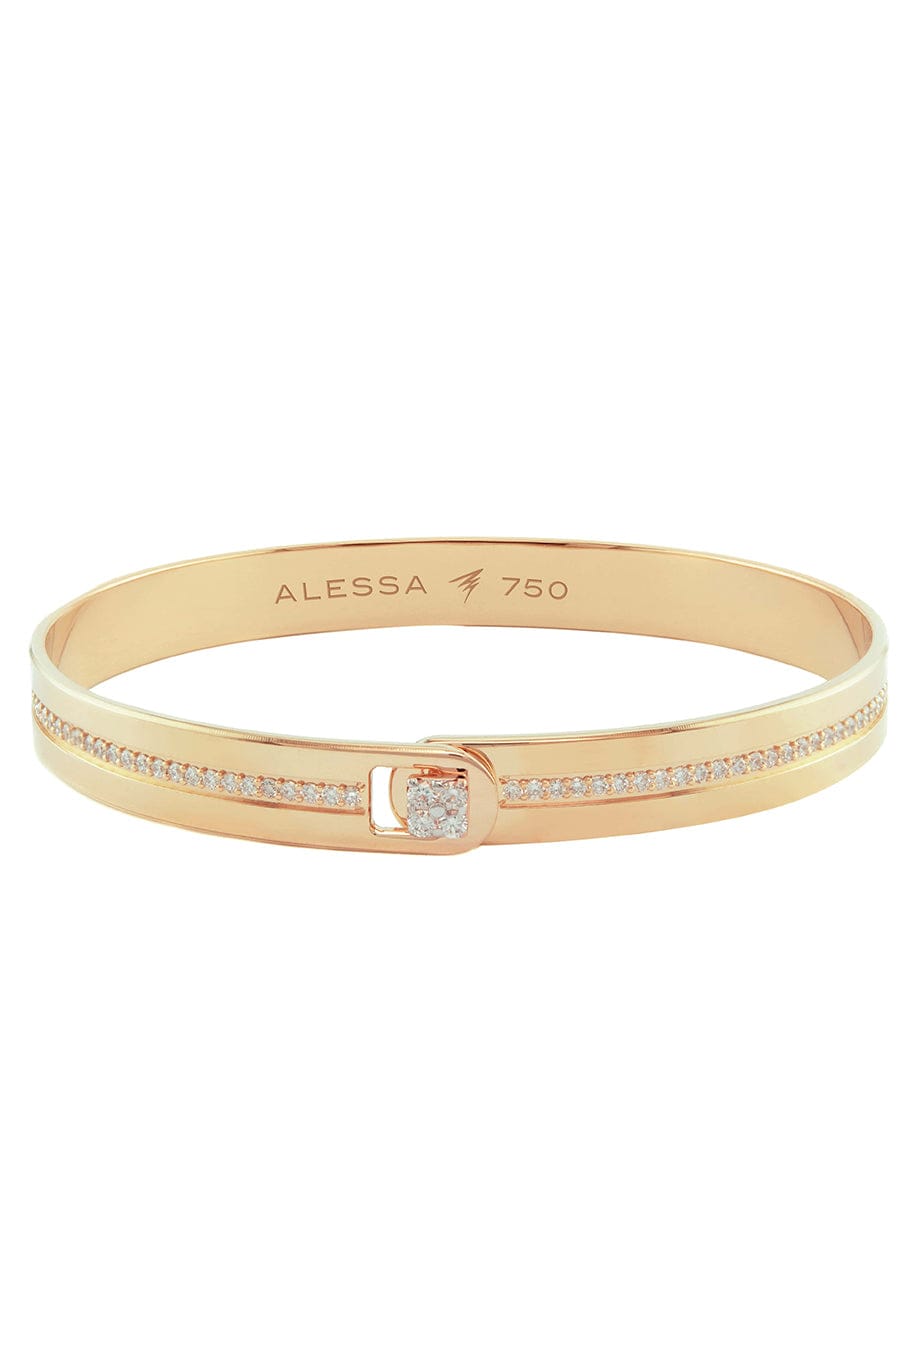 ALESSA JEWELRY-Diamond Equality Bracelet-ROSE GOLD